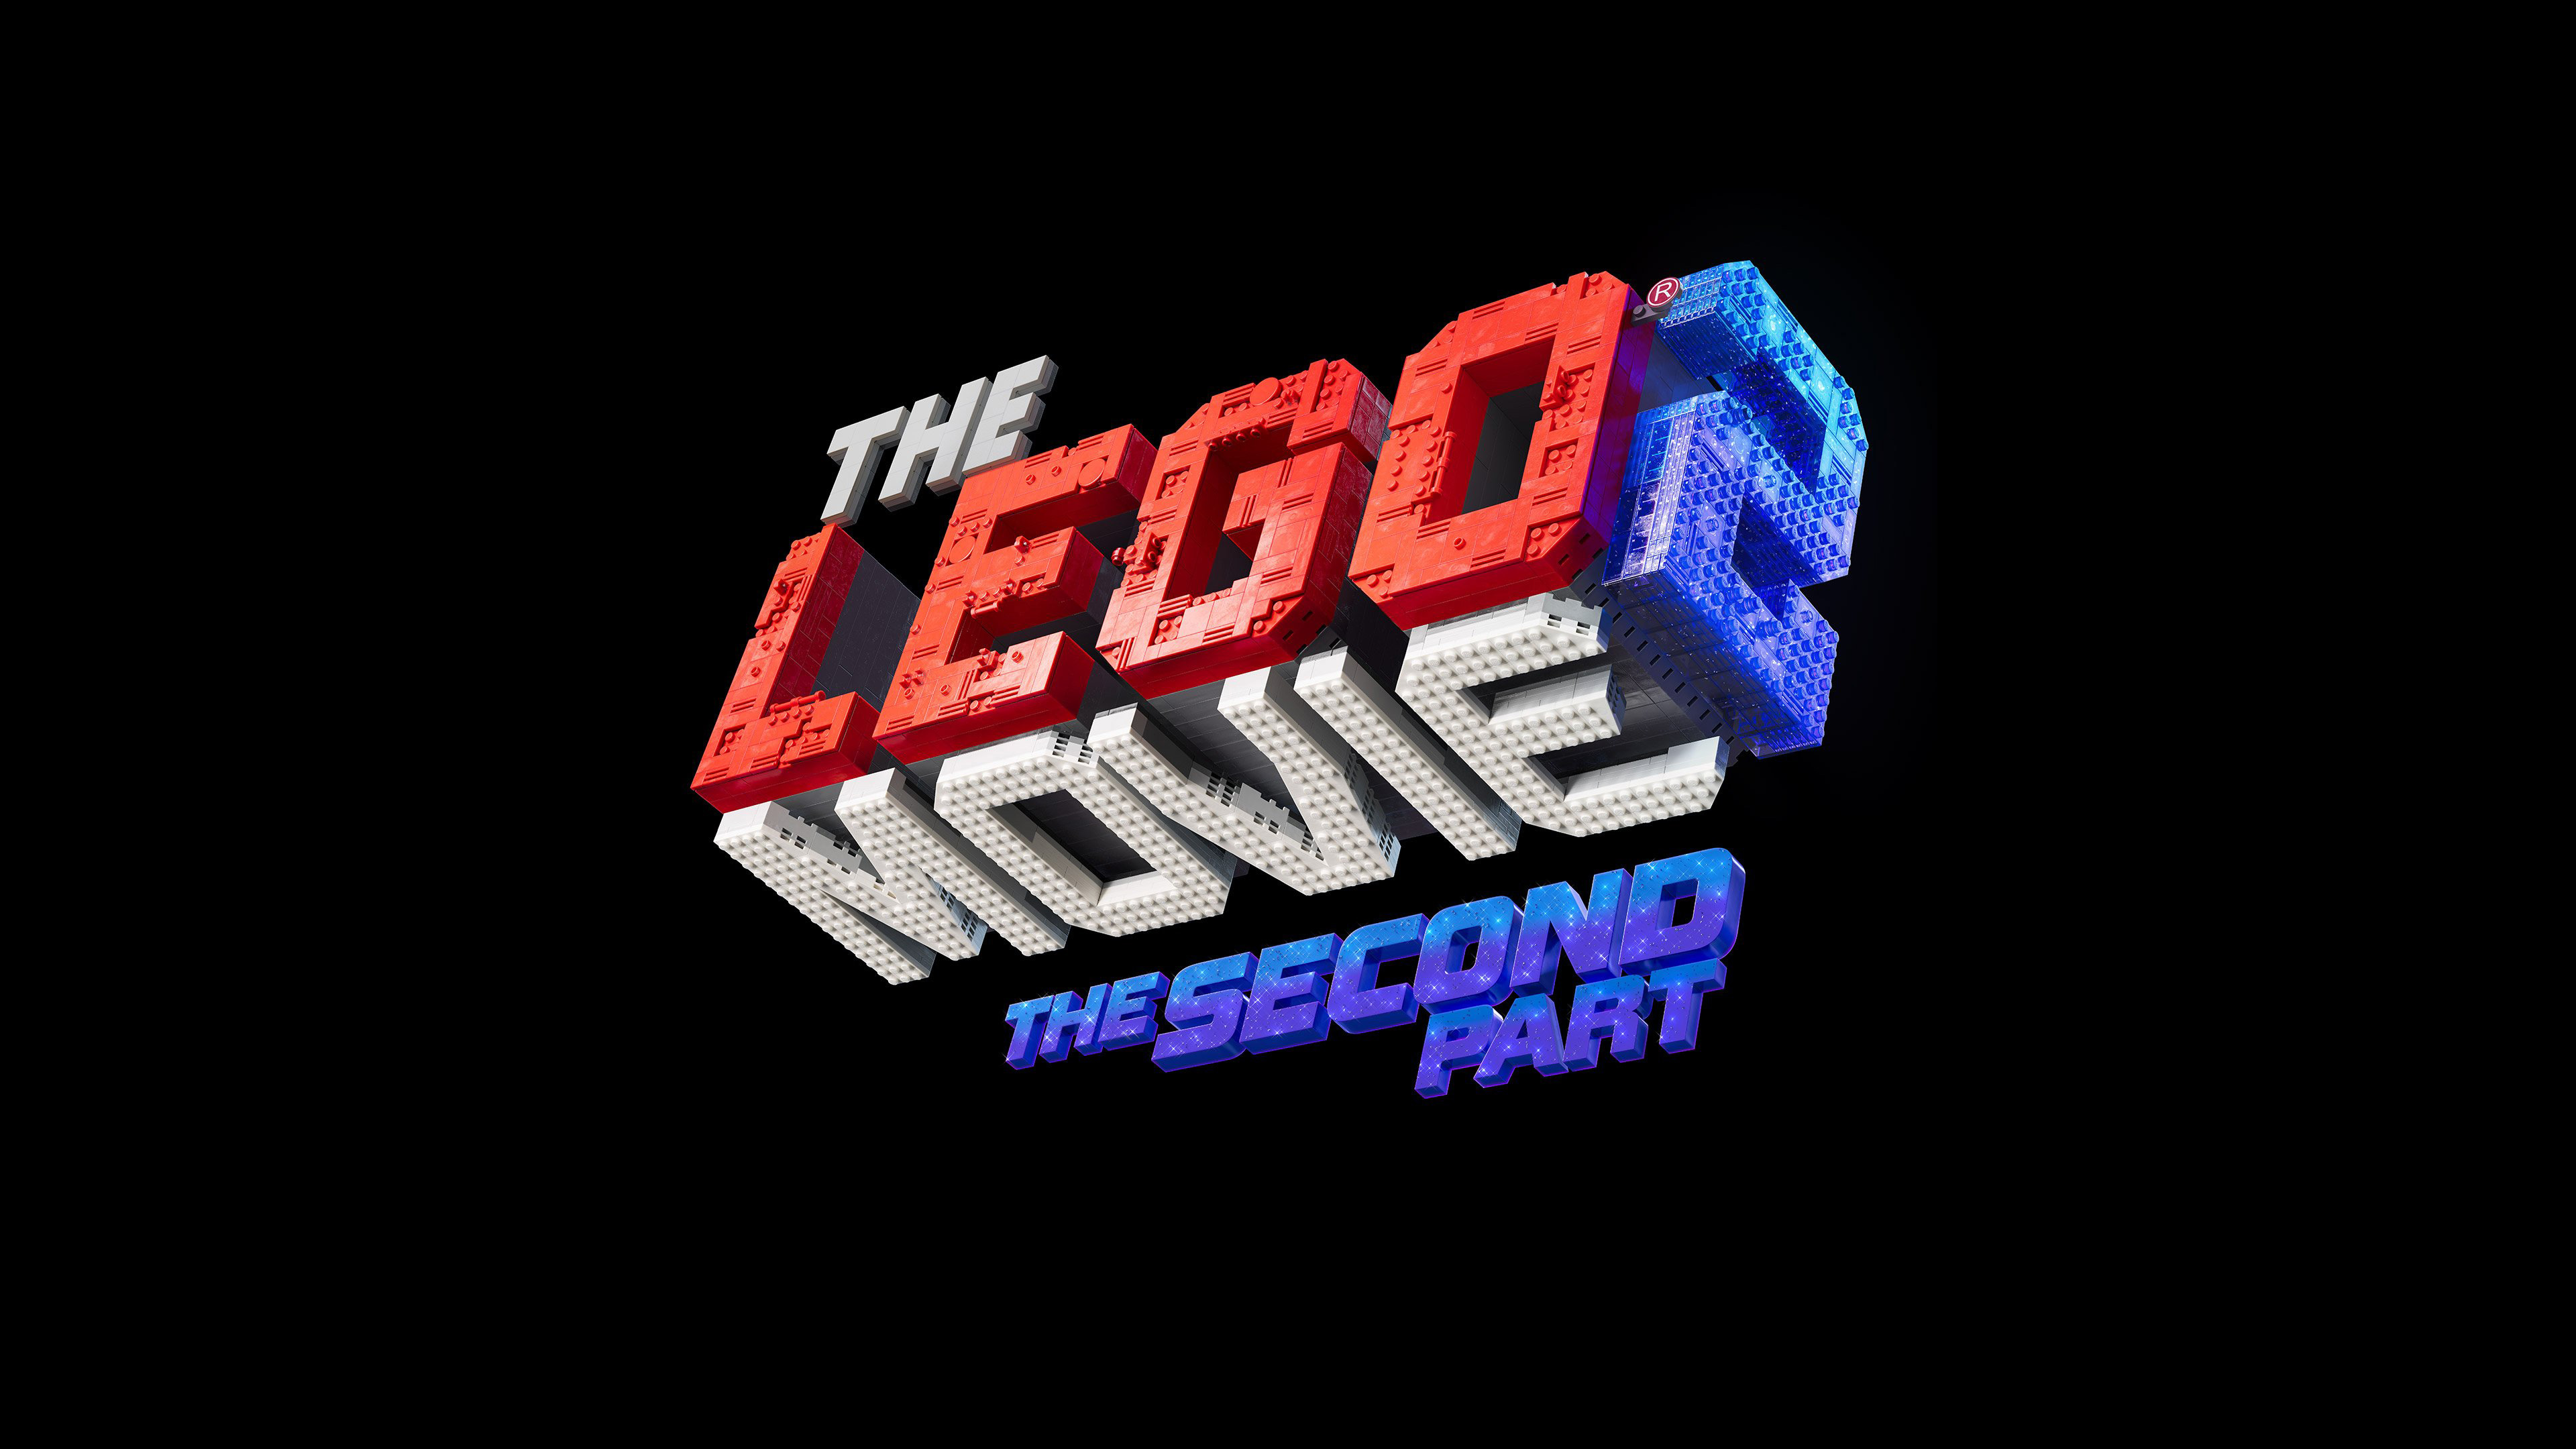 The LEGO Movie 2 wallpaper.jpg